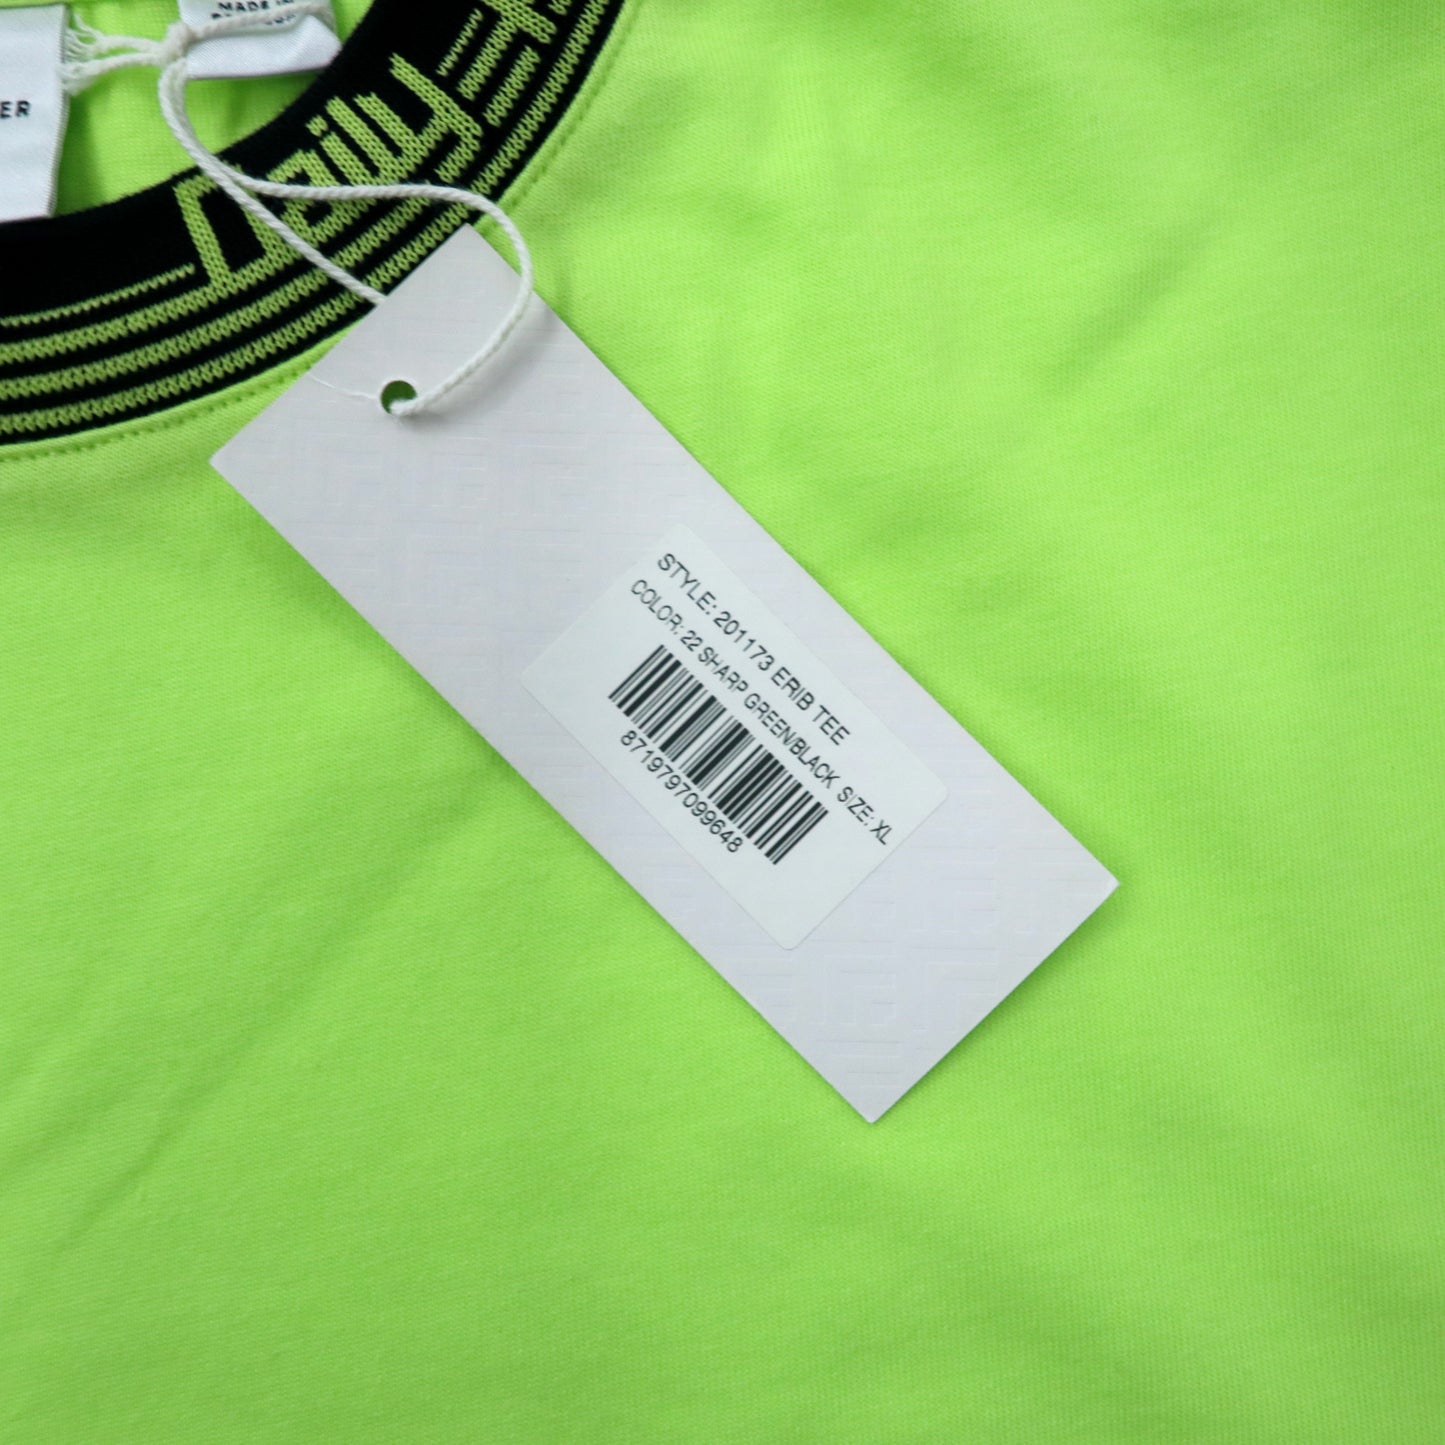 DAILY PAPER オーバーサイズ リブネックTシャツ XL グリーン コットン ERIB TEE 201173 ポルトガル製 未使用品